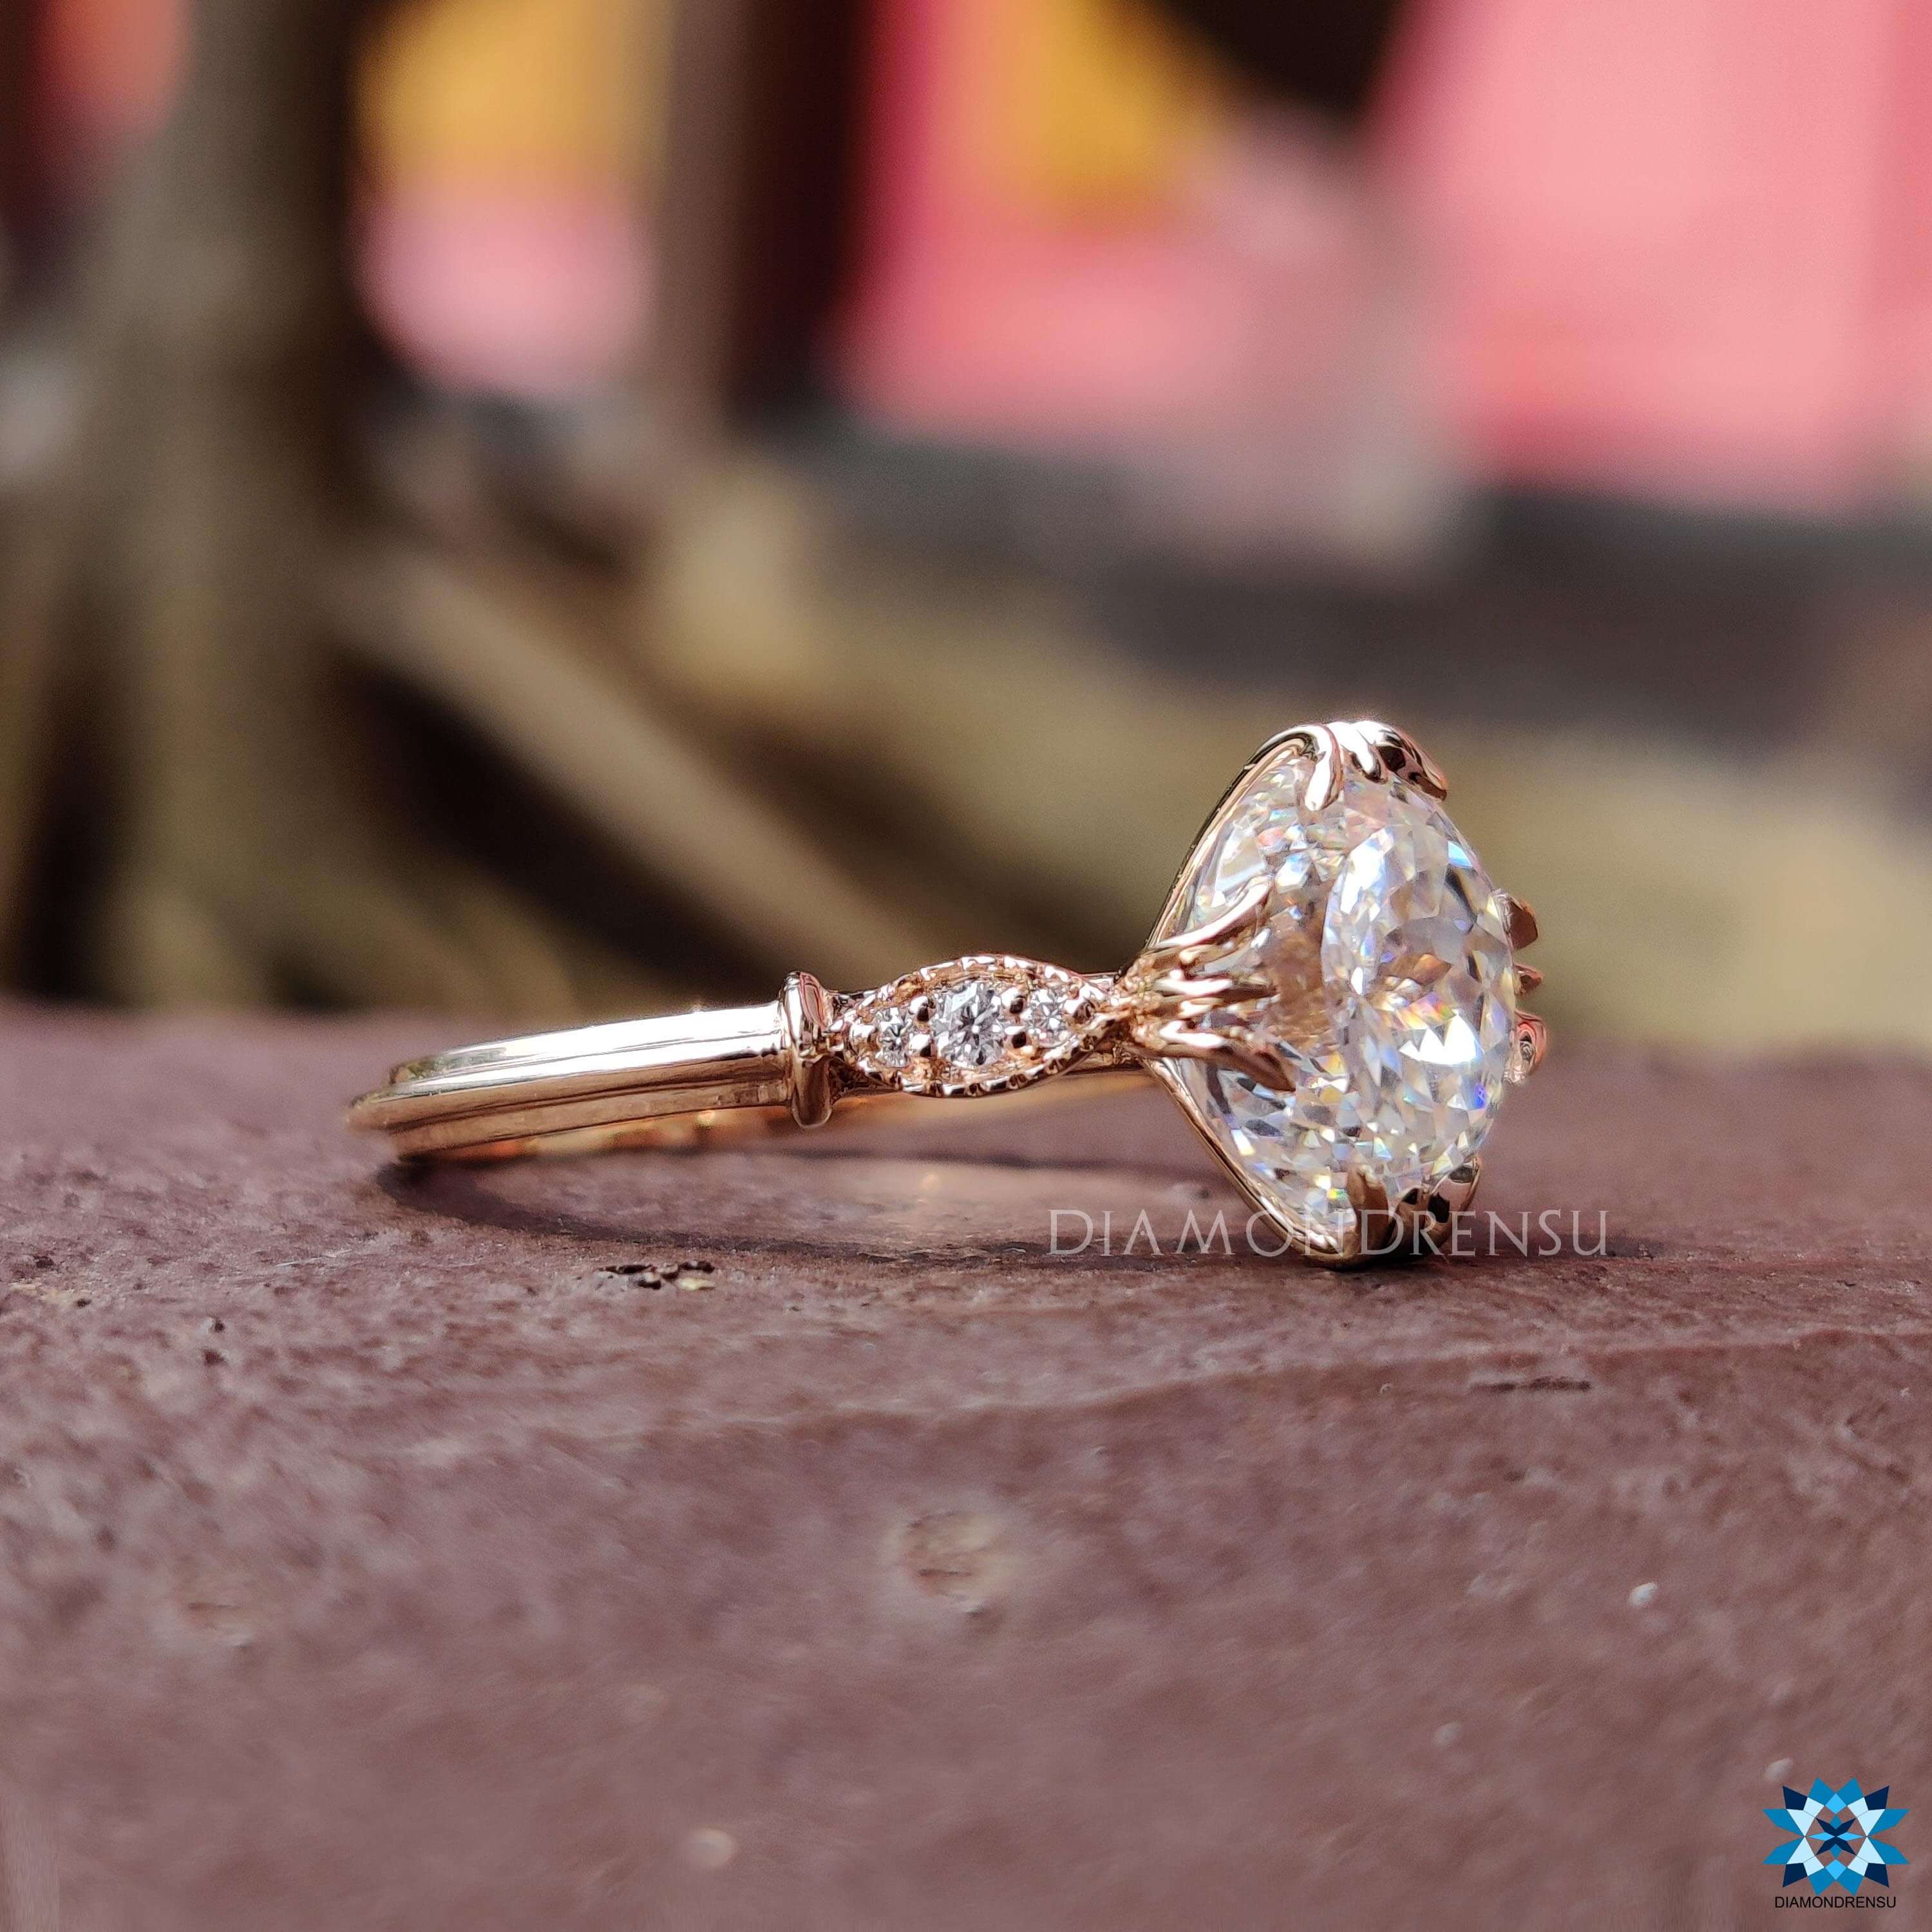 vintage style moissanite engagement rings